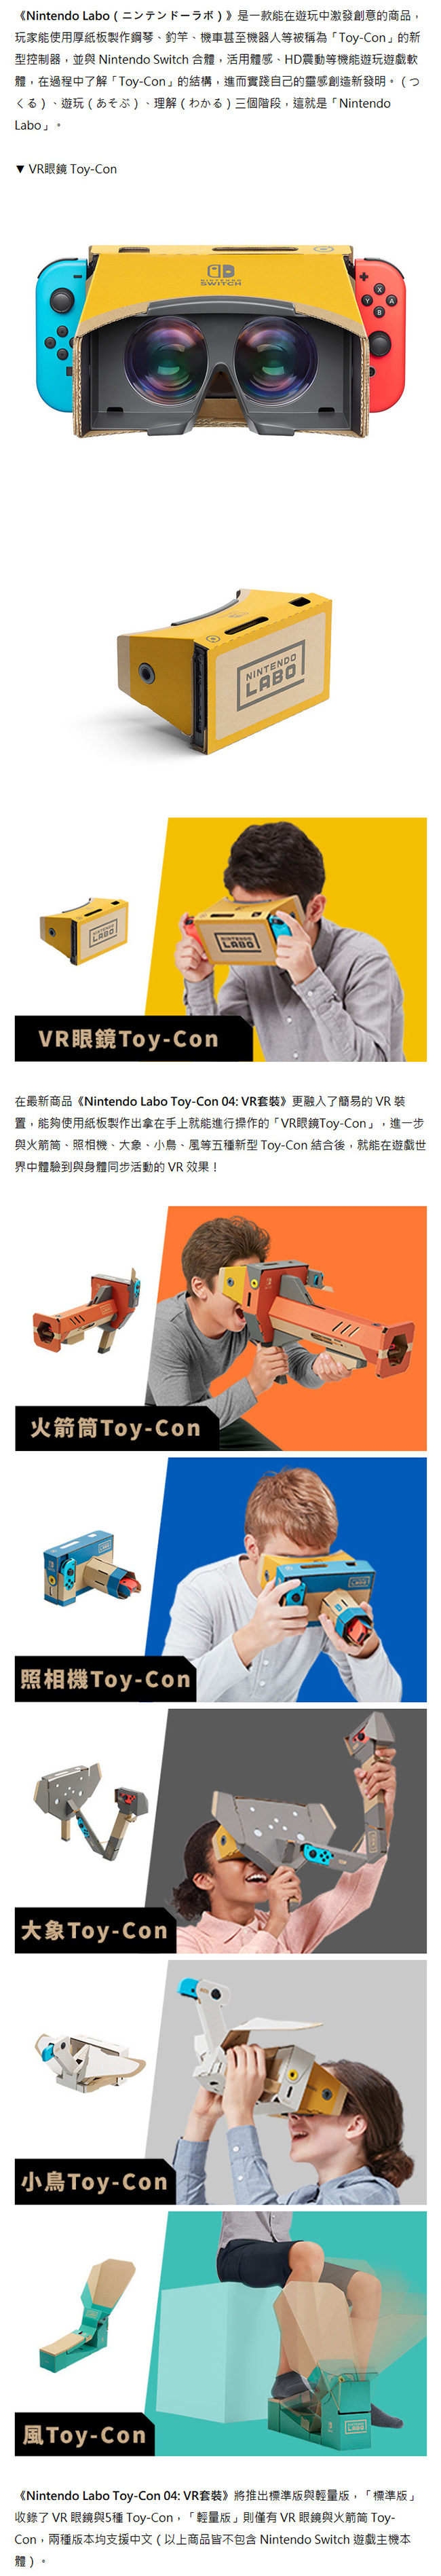 任天堂 Labo Toy-Con 04:VR輕量版 含軟體及VR眼鏡及火箭筒Toy-Con